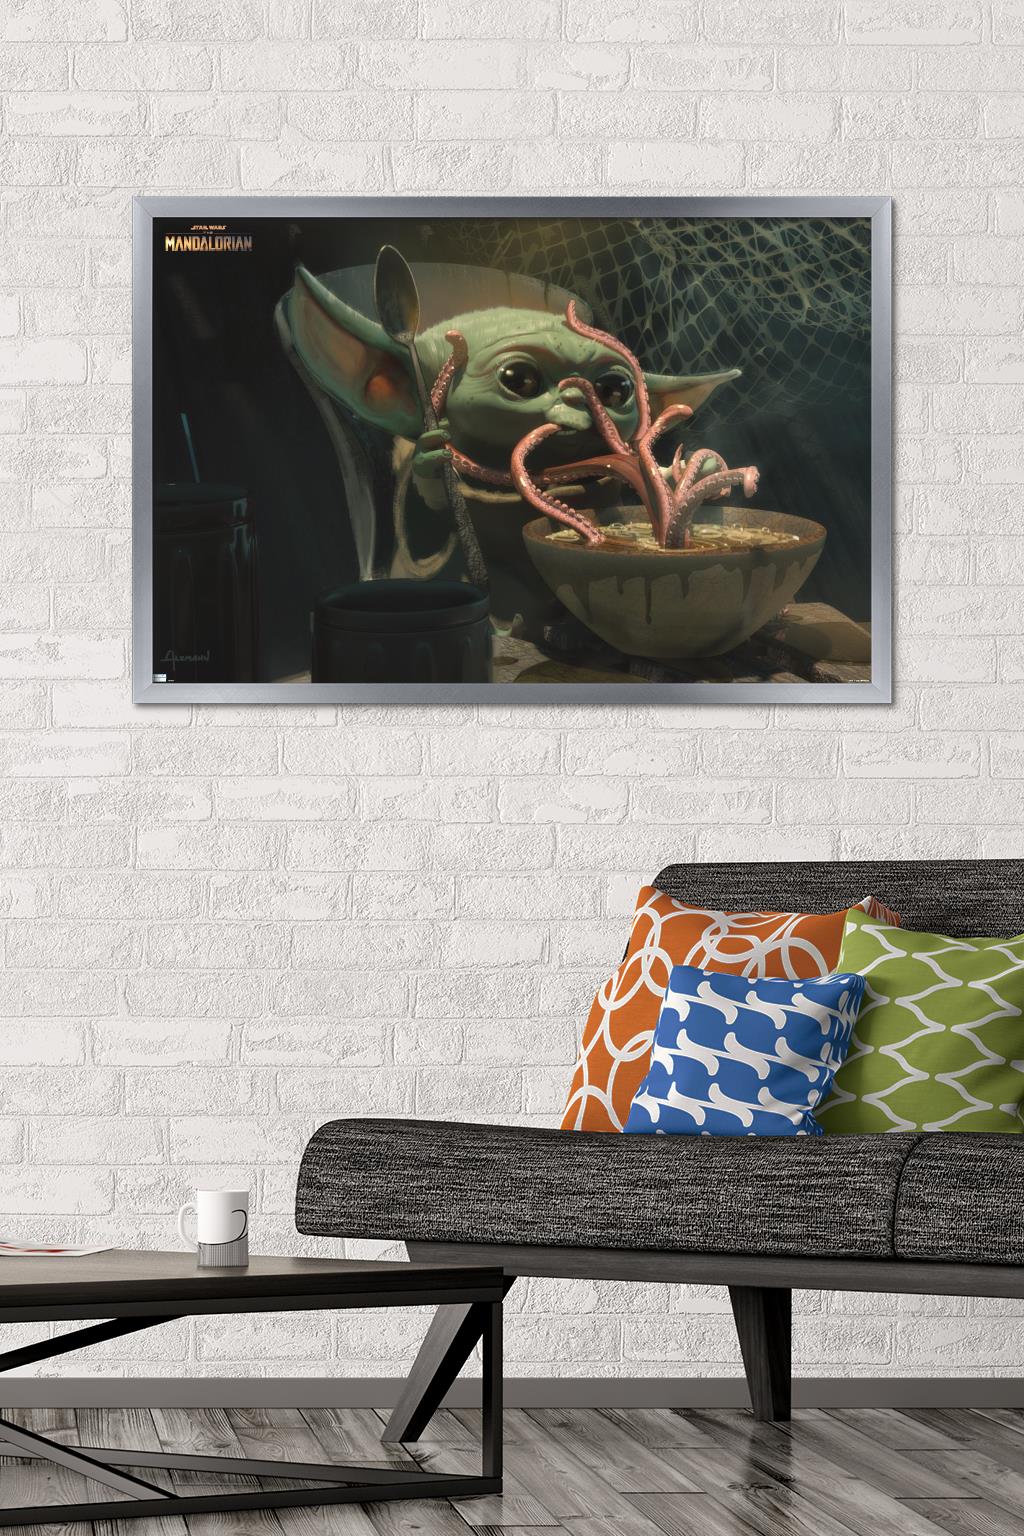 Star Wars: The Mandalorian Season 2 - Tentacles Wall Poster, 22.375" x 34", Framed - image 2 of 5